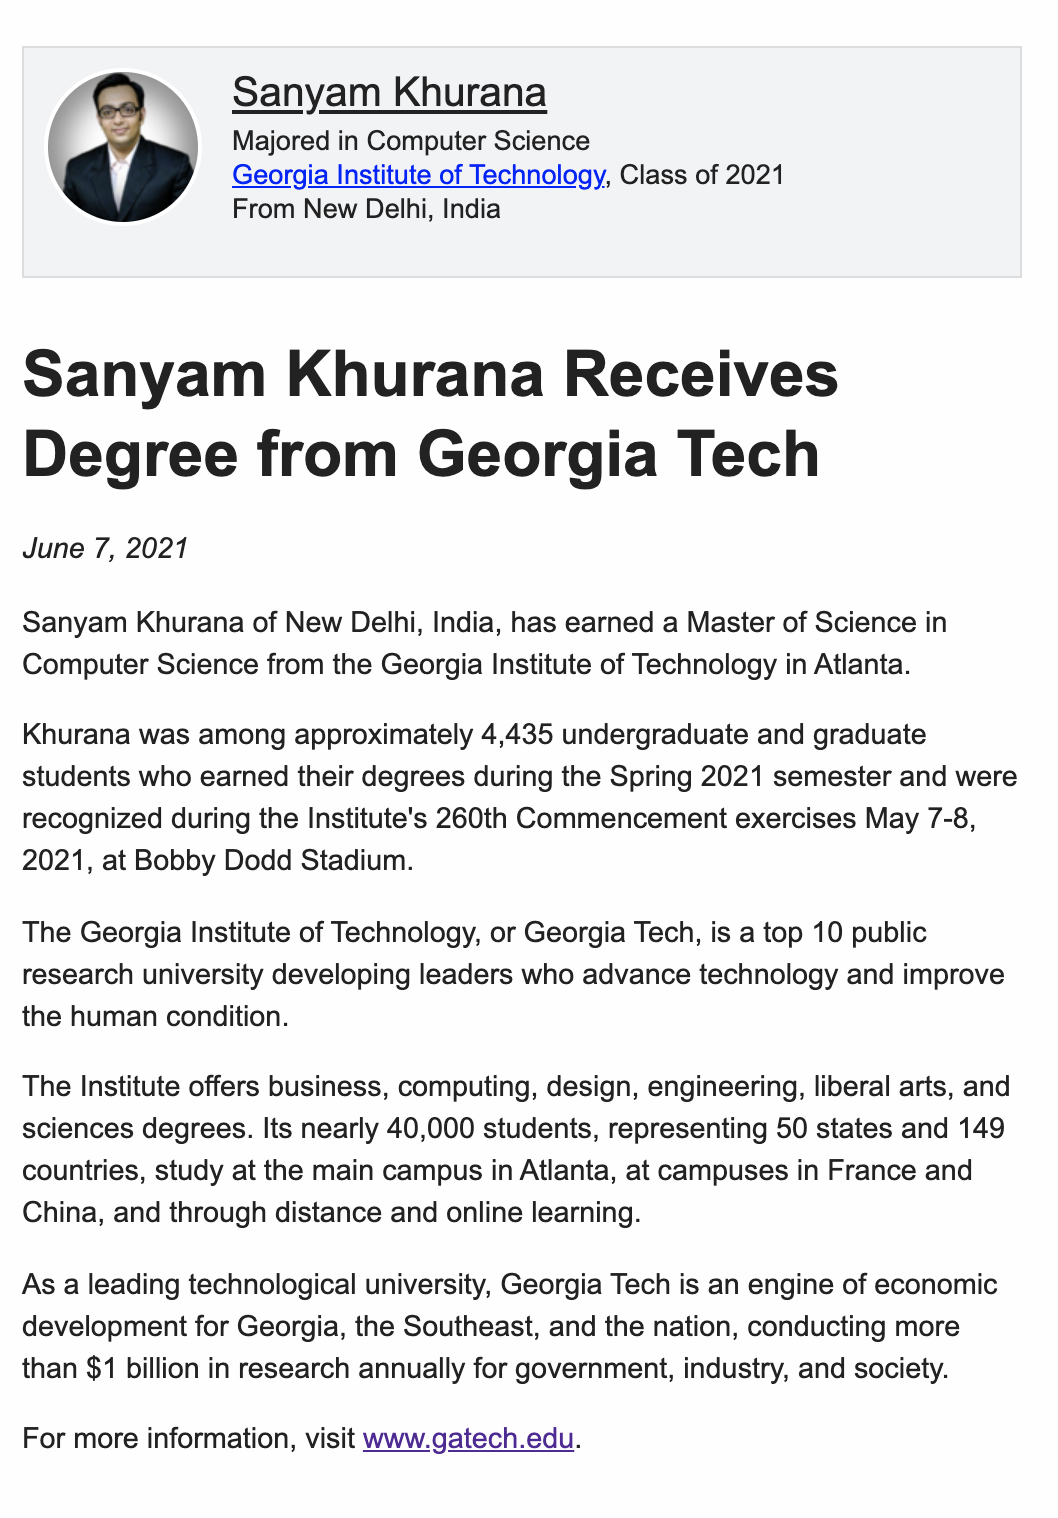 News about Sanyam Khurana graduating from Georgia Tech